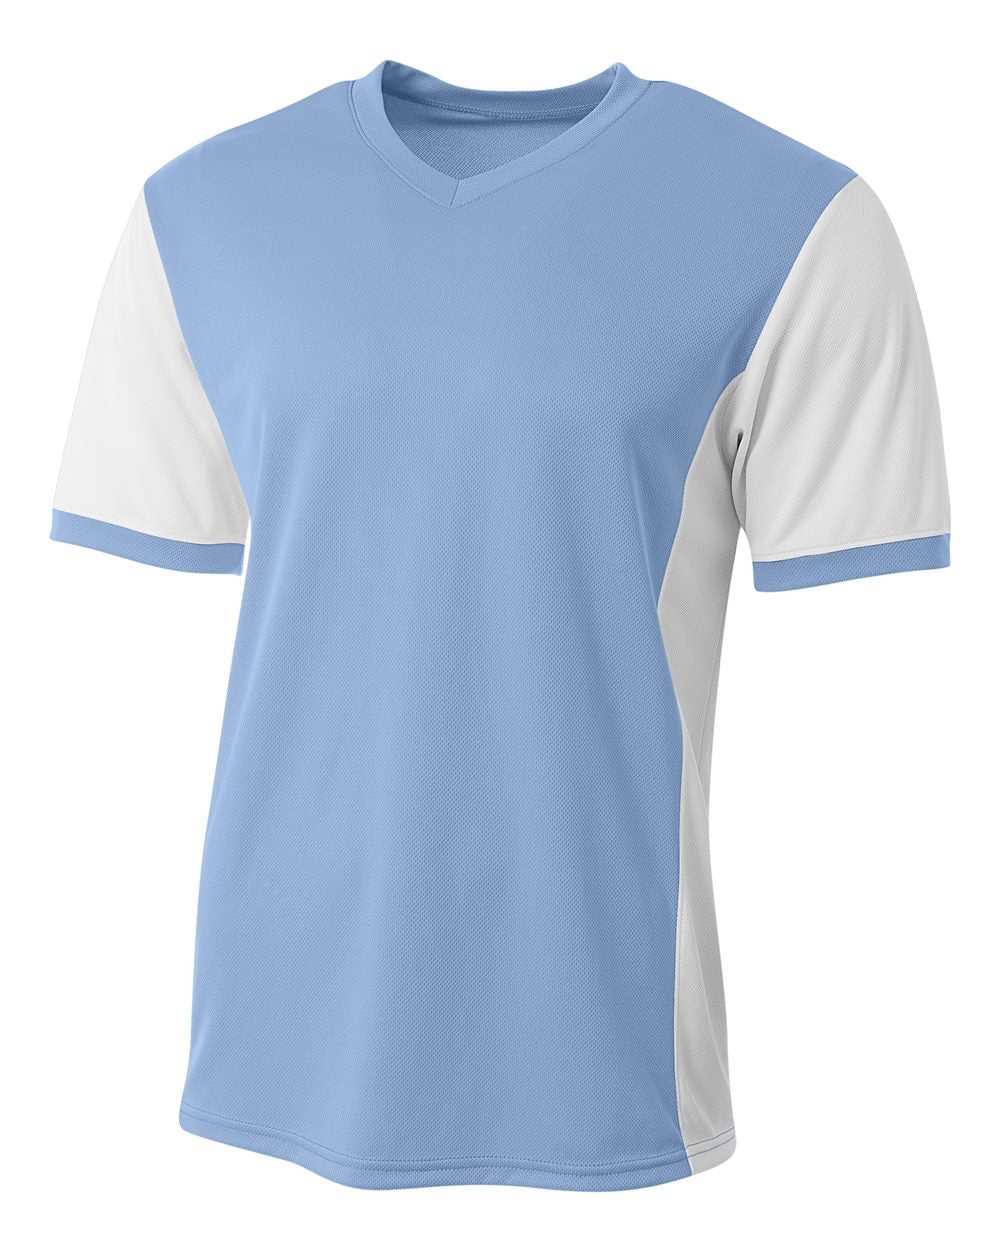 A4 N3017 Premier Soccer Jersey - Light Blue White - HIT a Double